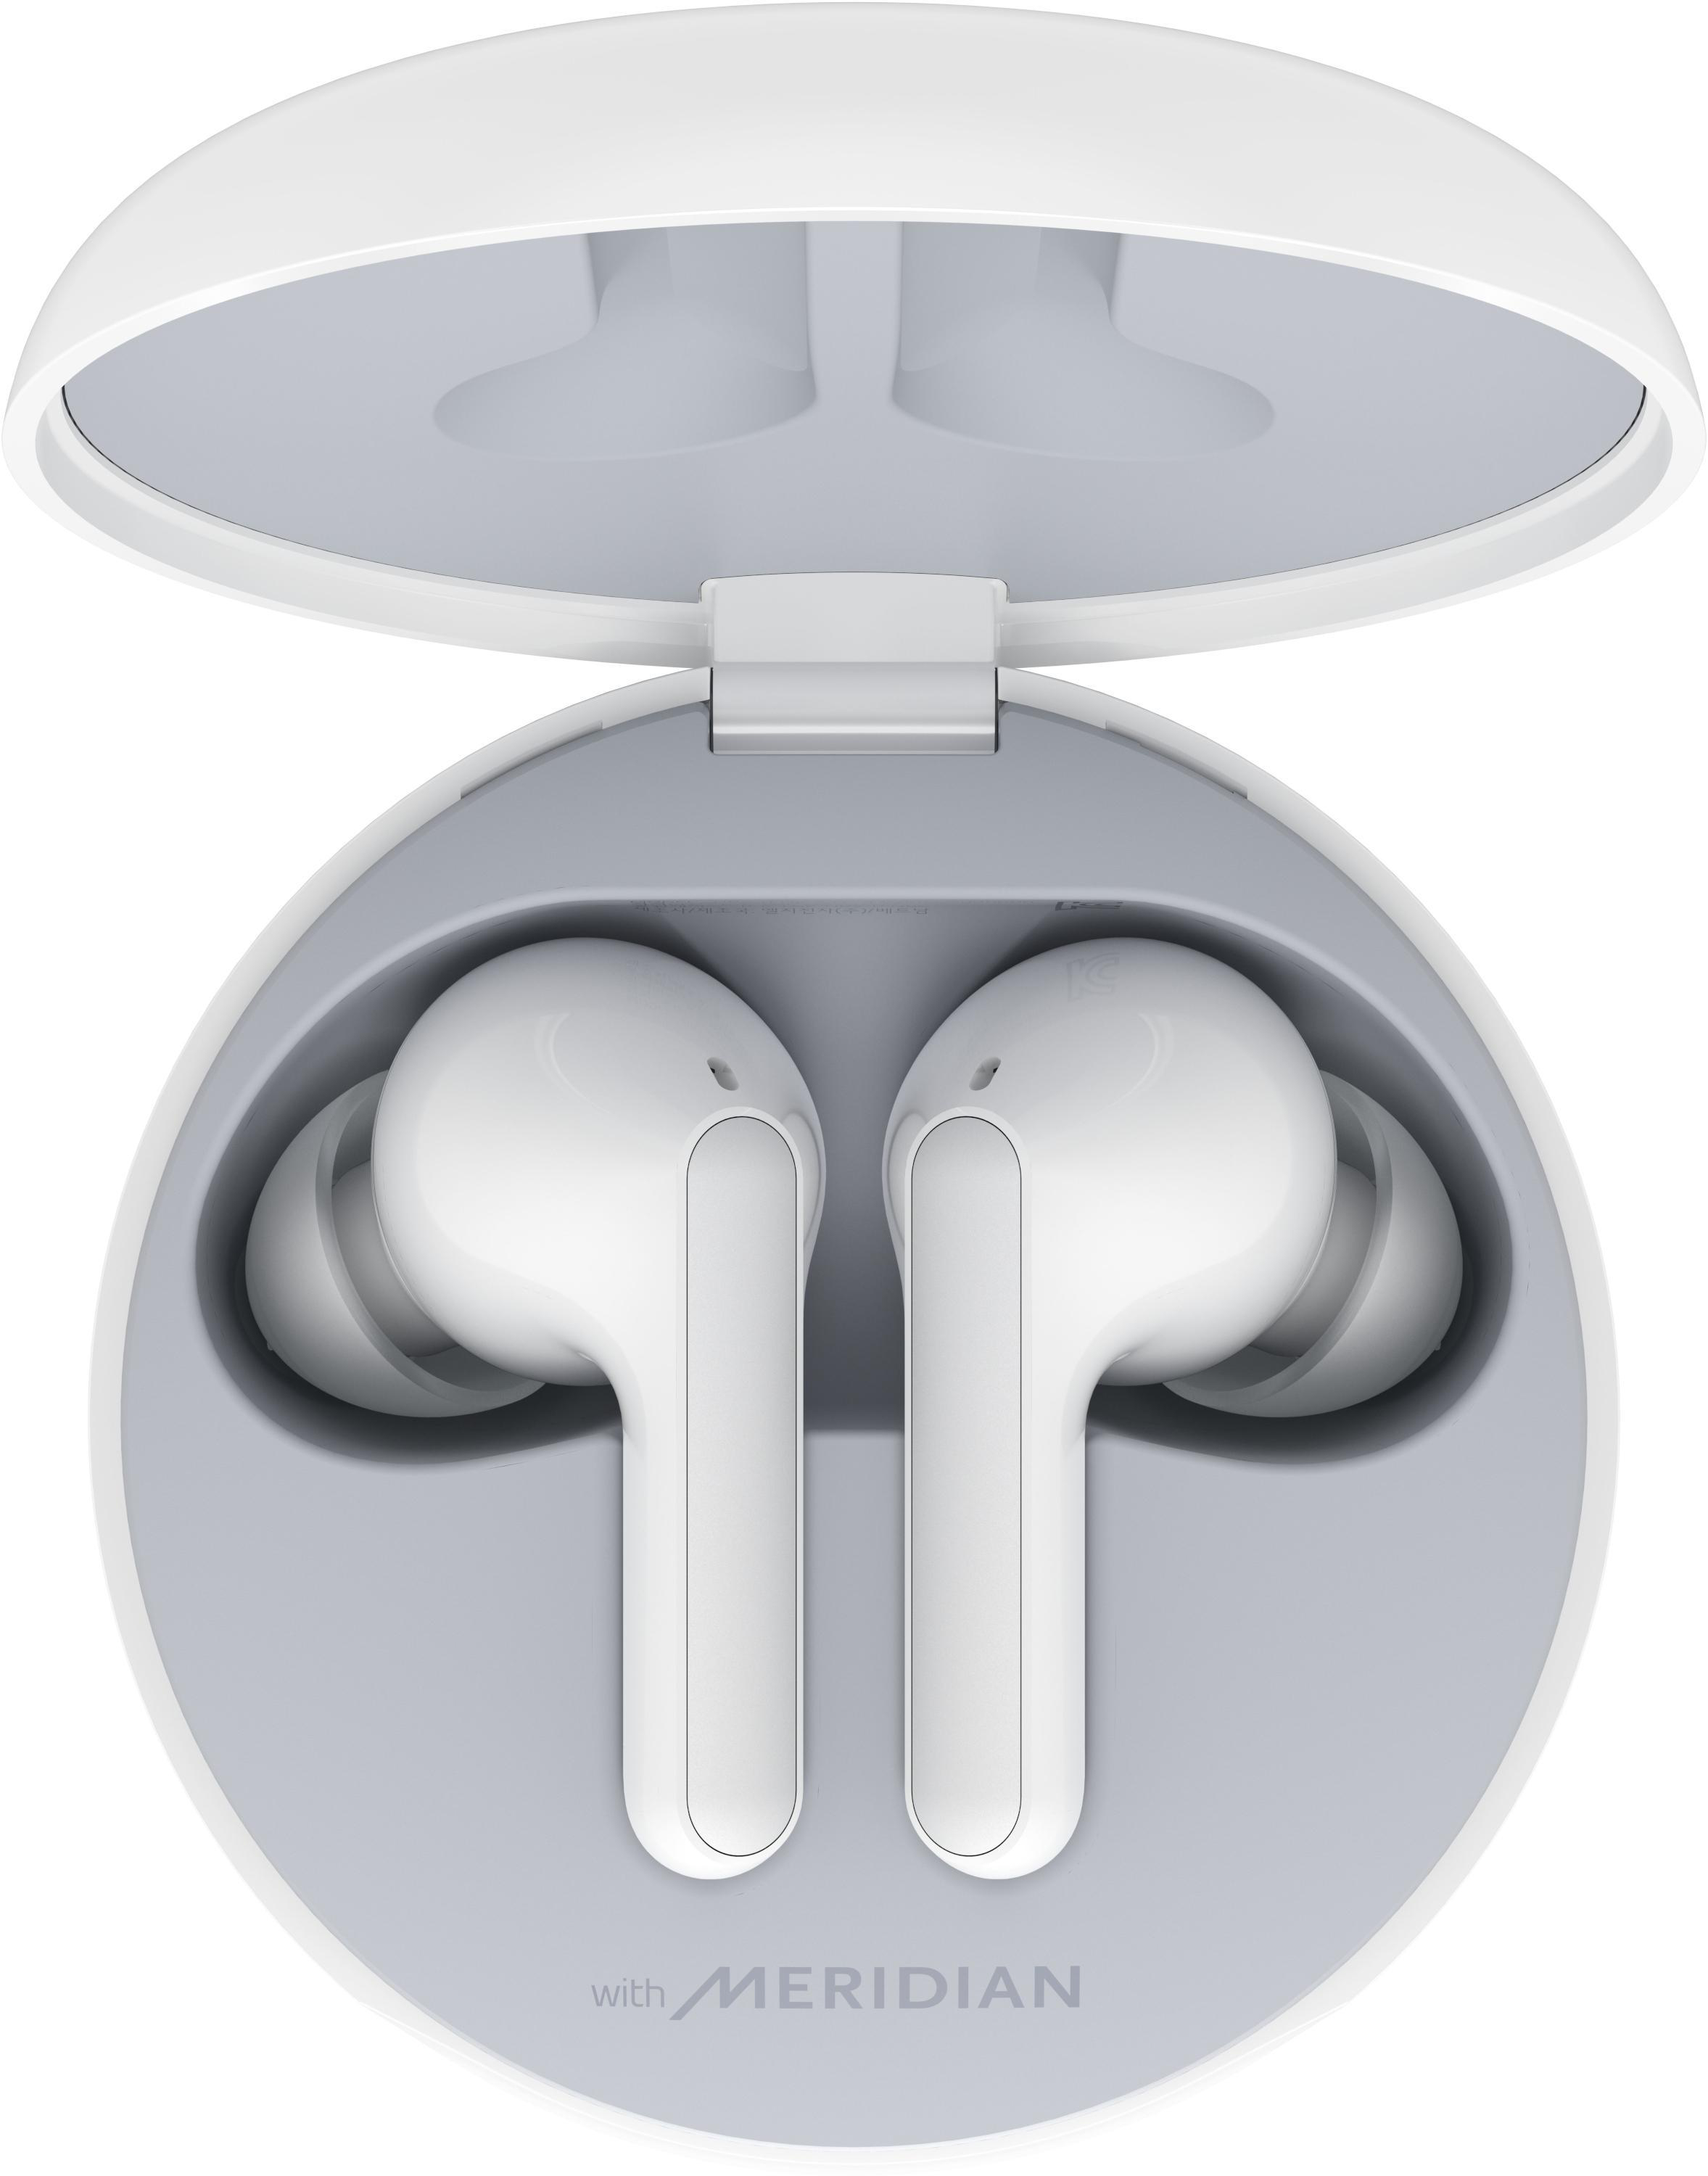 LG HBS-FN6.APL2P, In-ear Weiß/Bubble Bluetooth Kopfhörer Gum